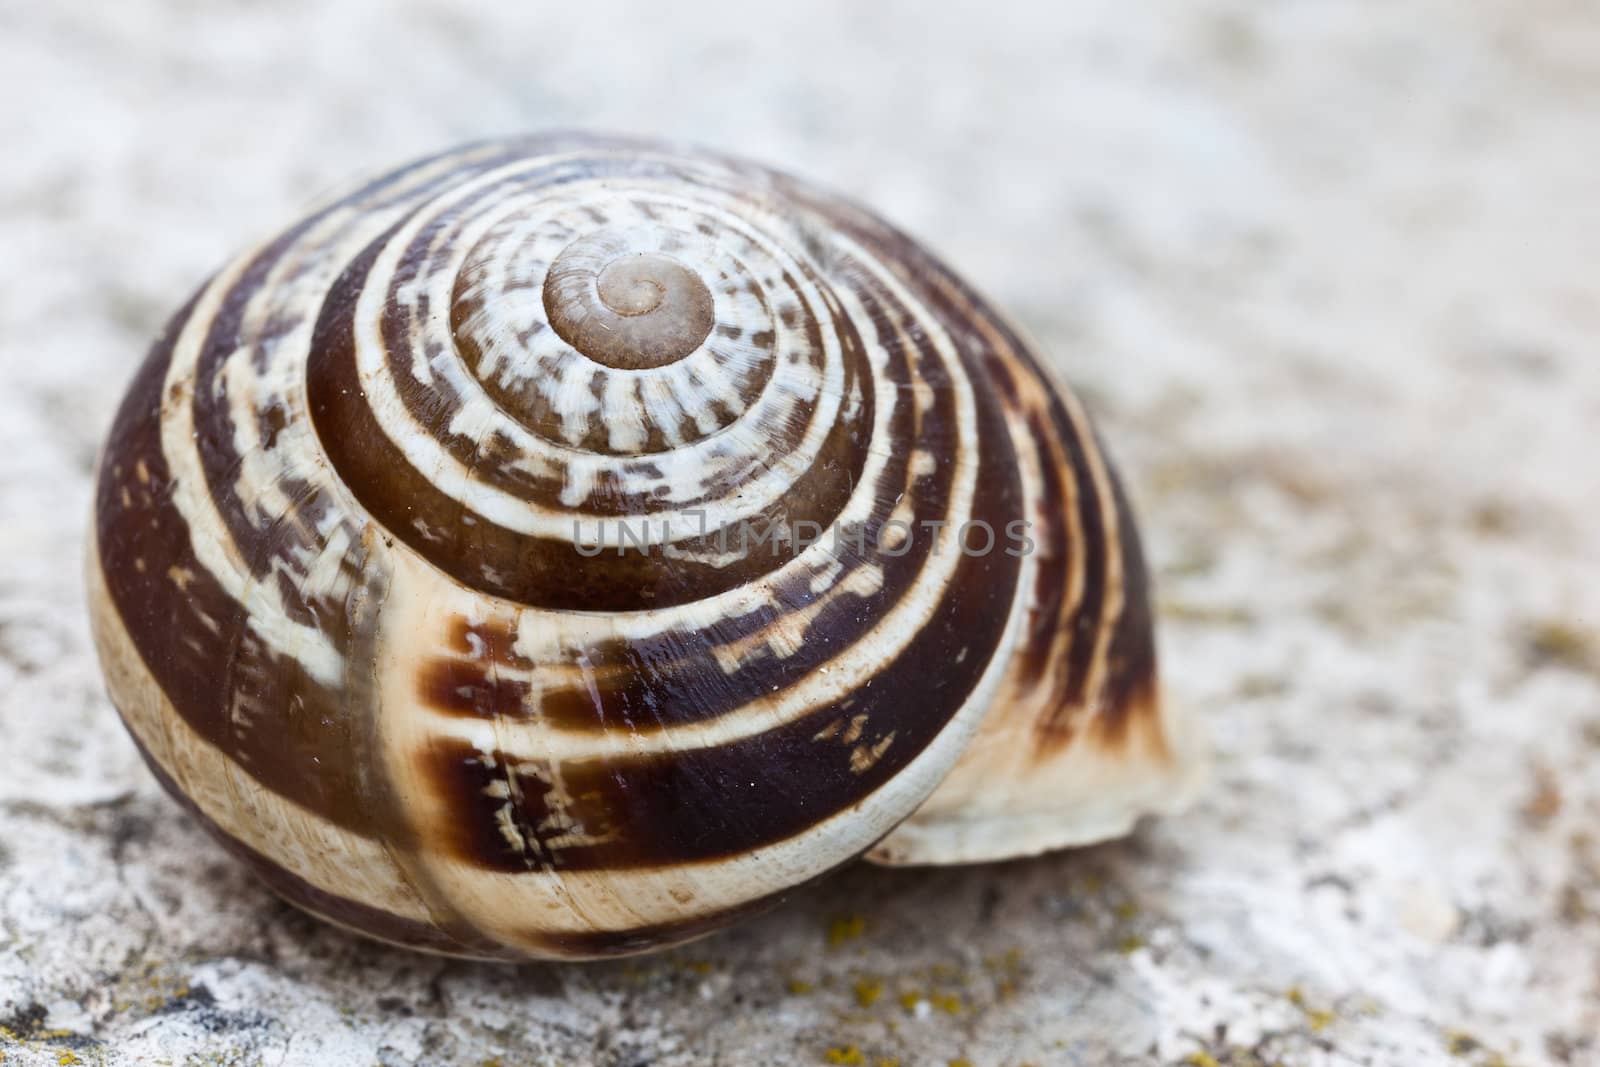 Snail Shell by dario_lo_presti